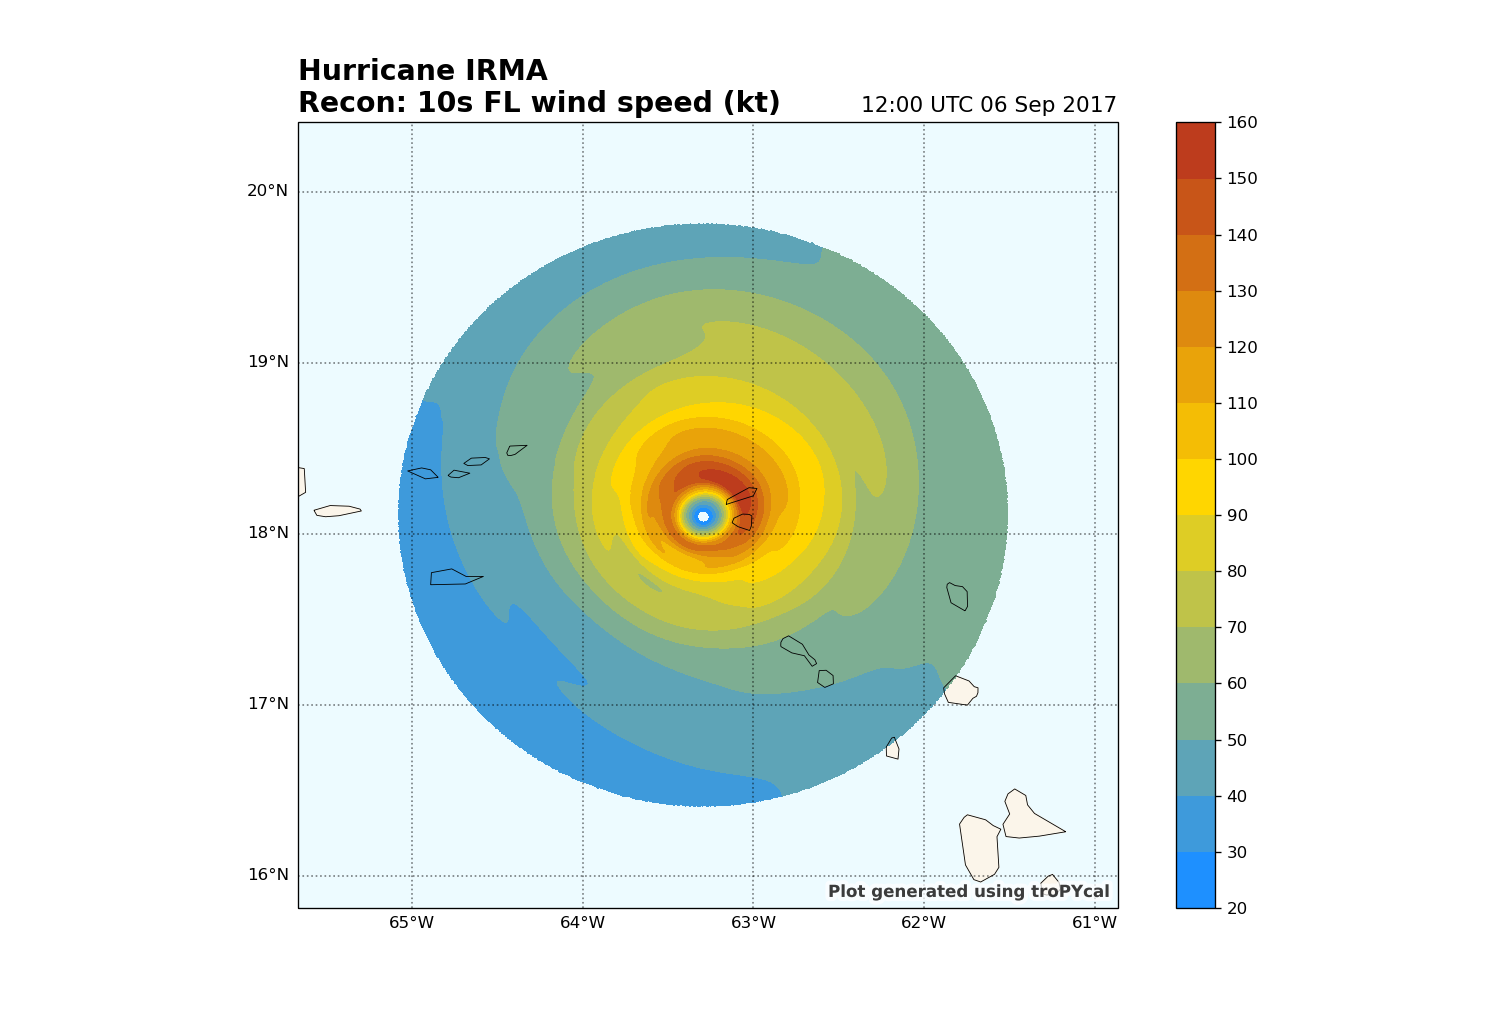 Hurricane IRMA Recon: 10s FL wind speed (kt), 12:00 UTC 06 Sep 2017